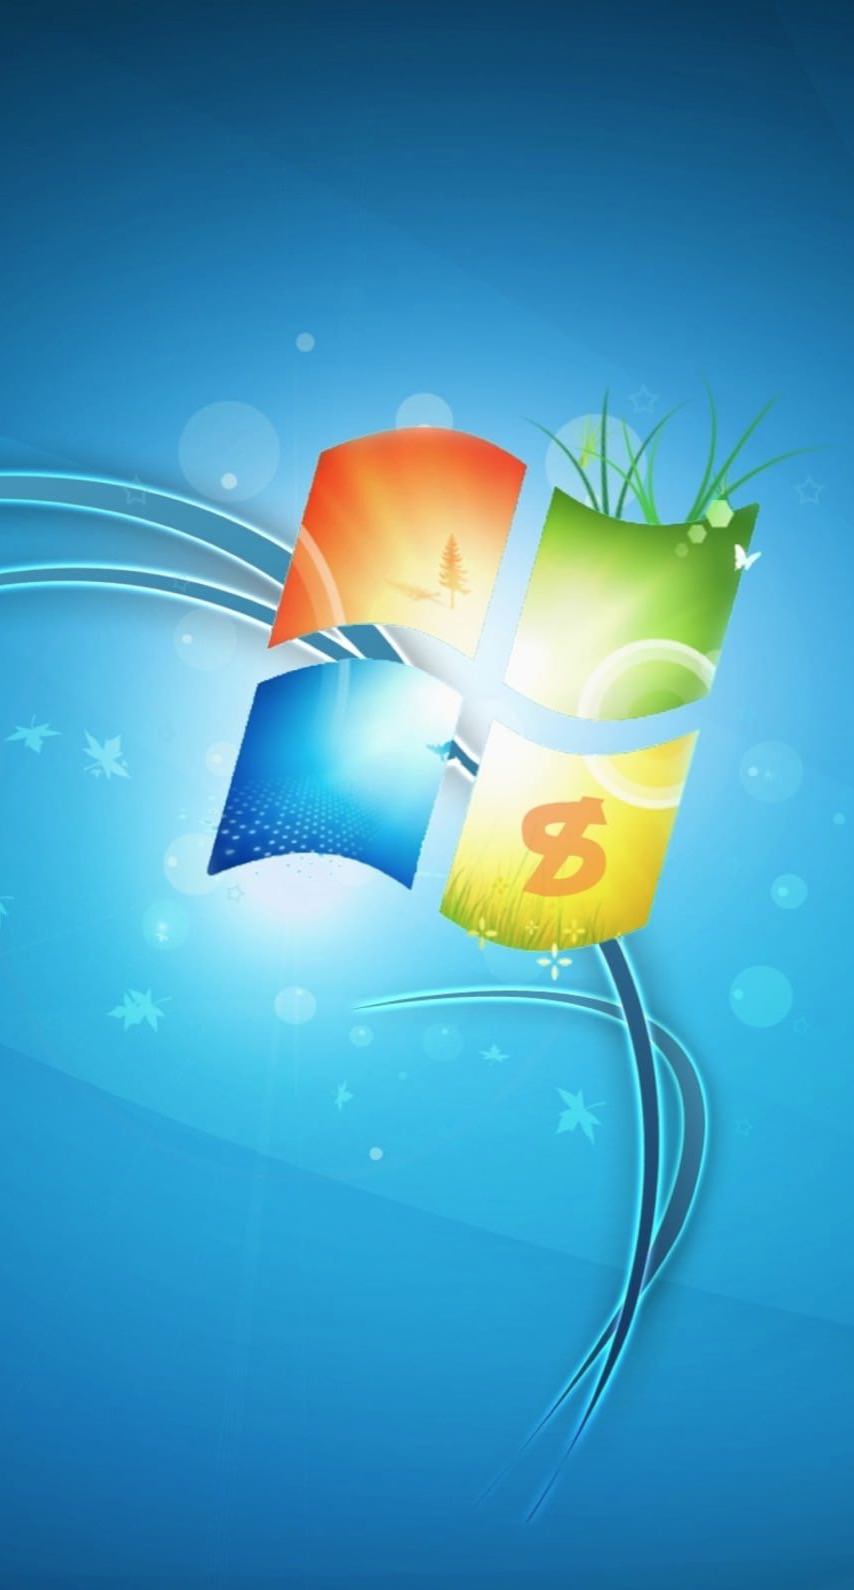 Windows logo | wallpaper.sc iPhone7